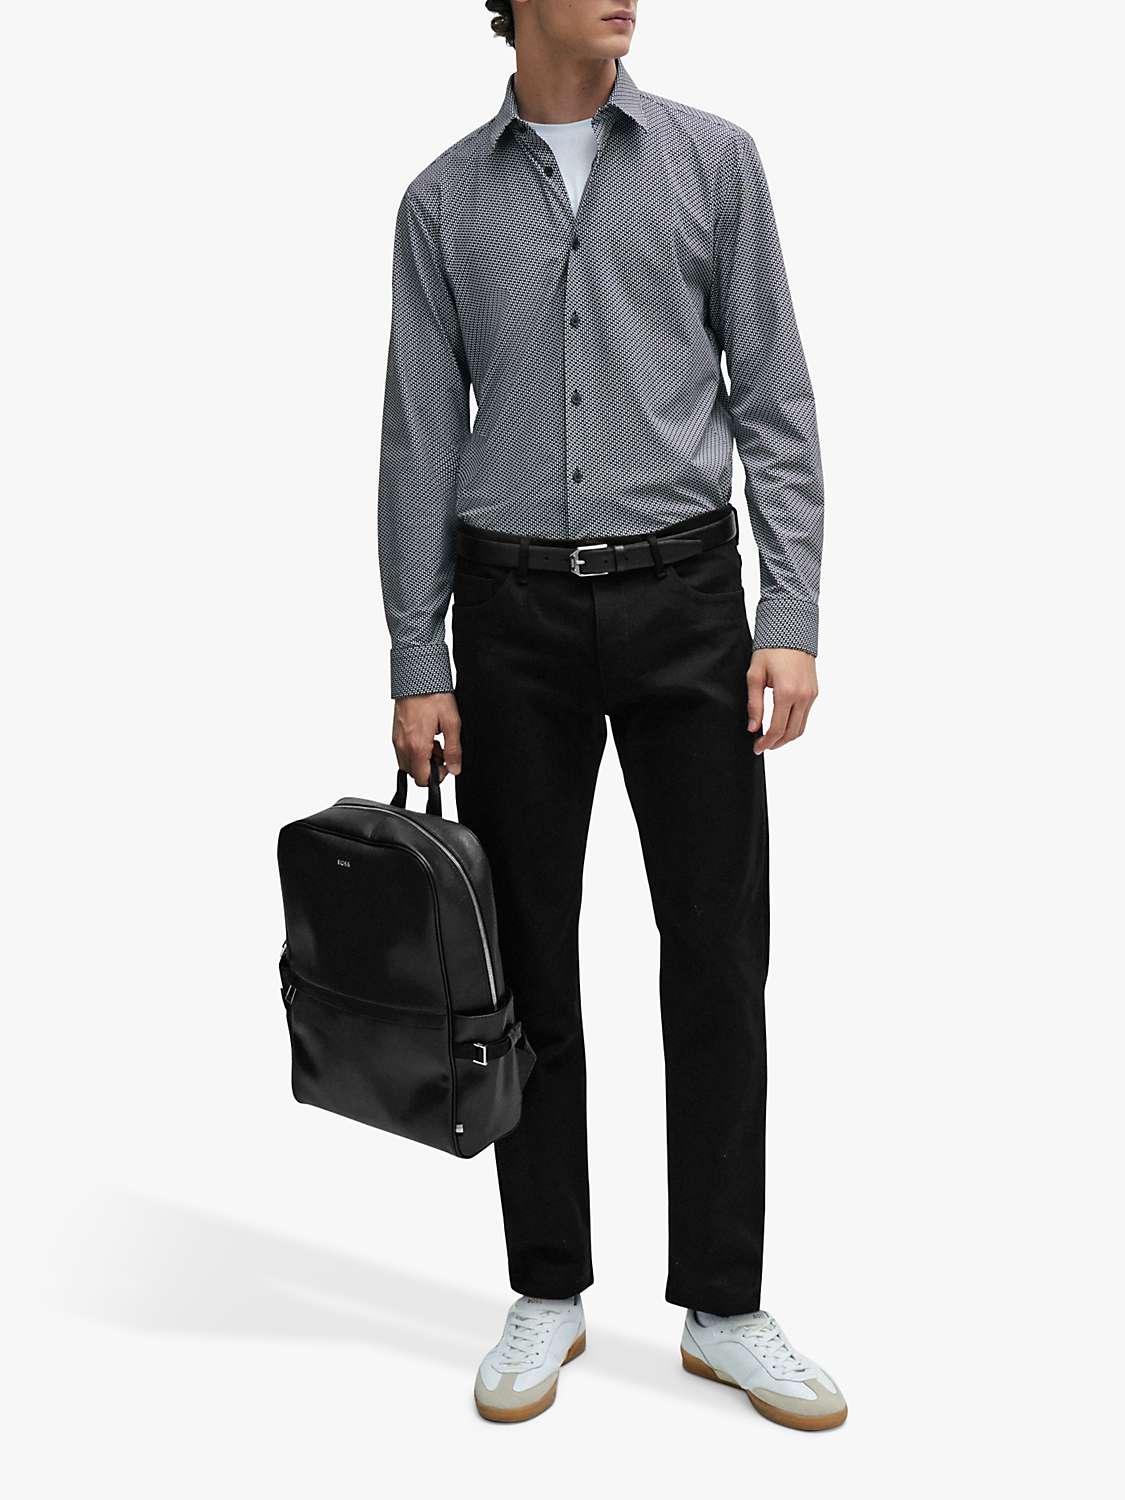 Buy BOSS Roan Kent Shirt, Black Online at johnlewis.com